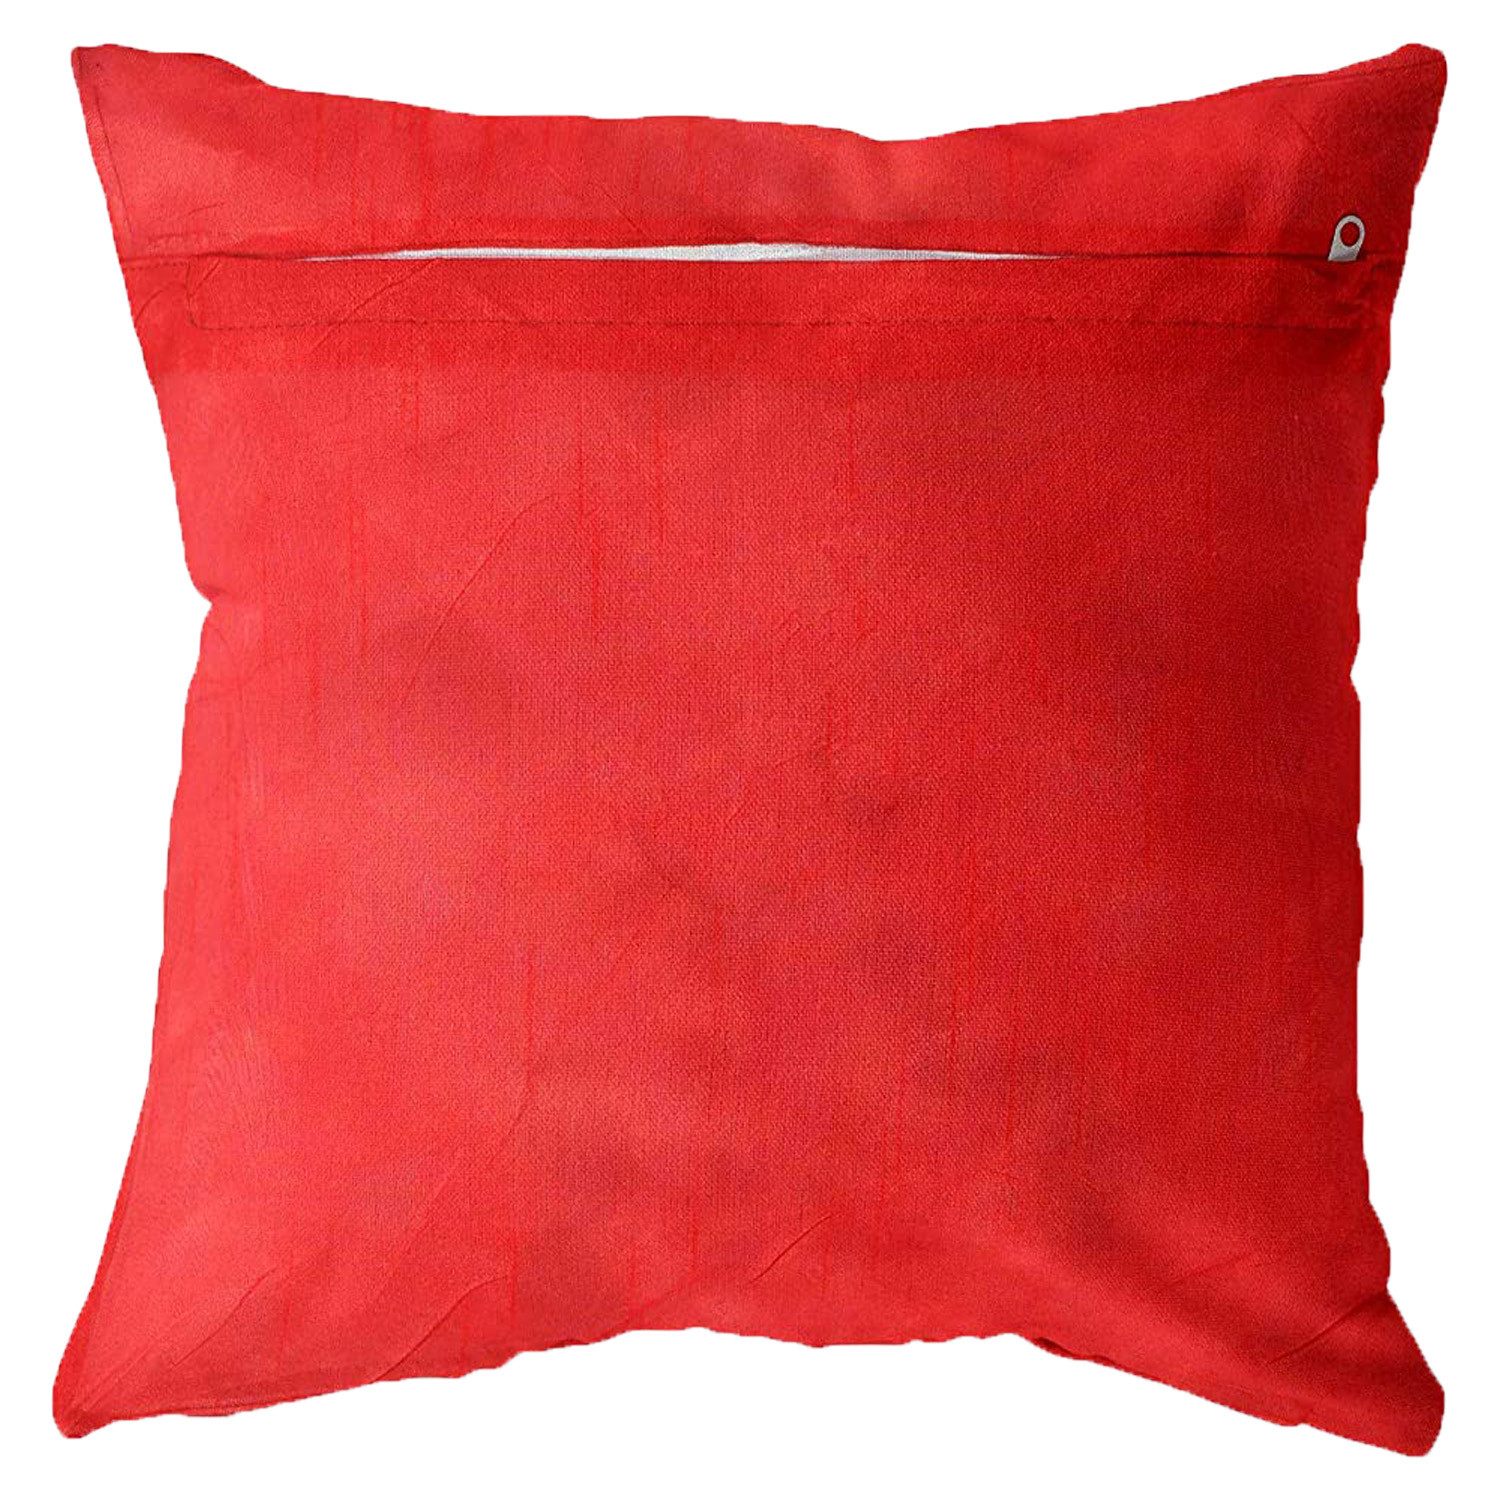 Kuber Industries Disney Minnie Print Cushion Cover|Sofa Cushion Covers|Cushion Covers 16 inch x 16 inch|Cushion Cover Set of 5 (Red)